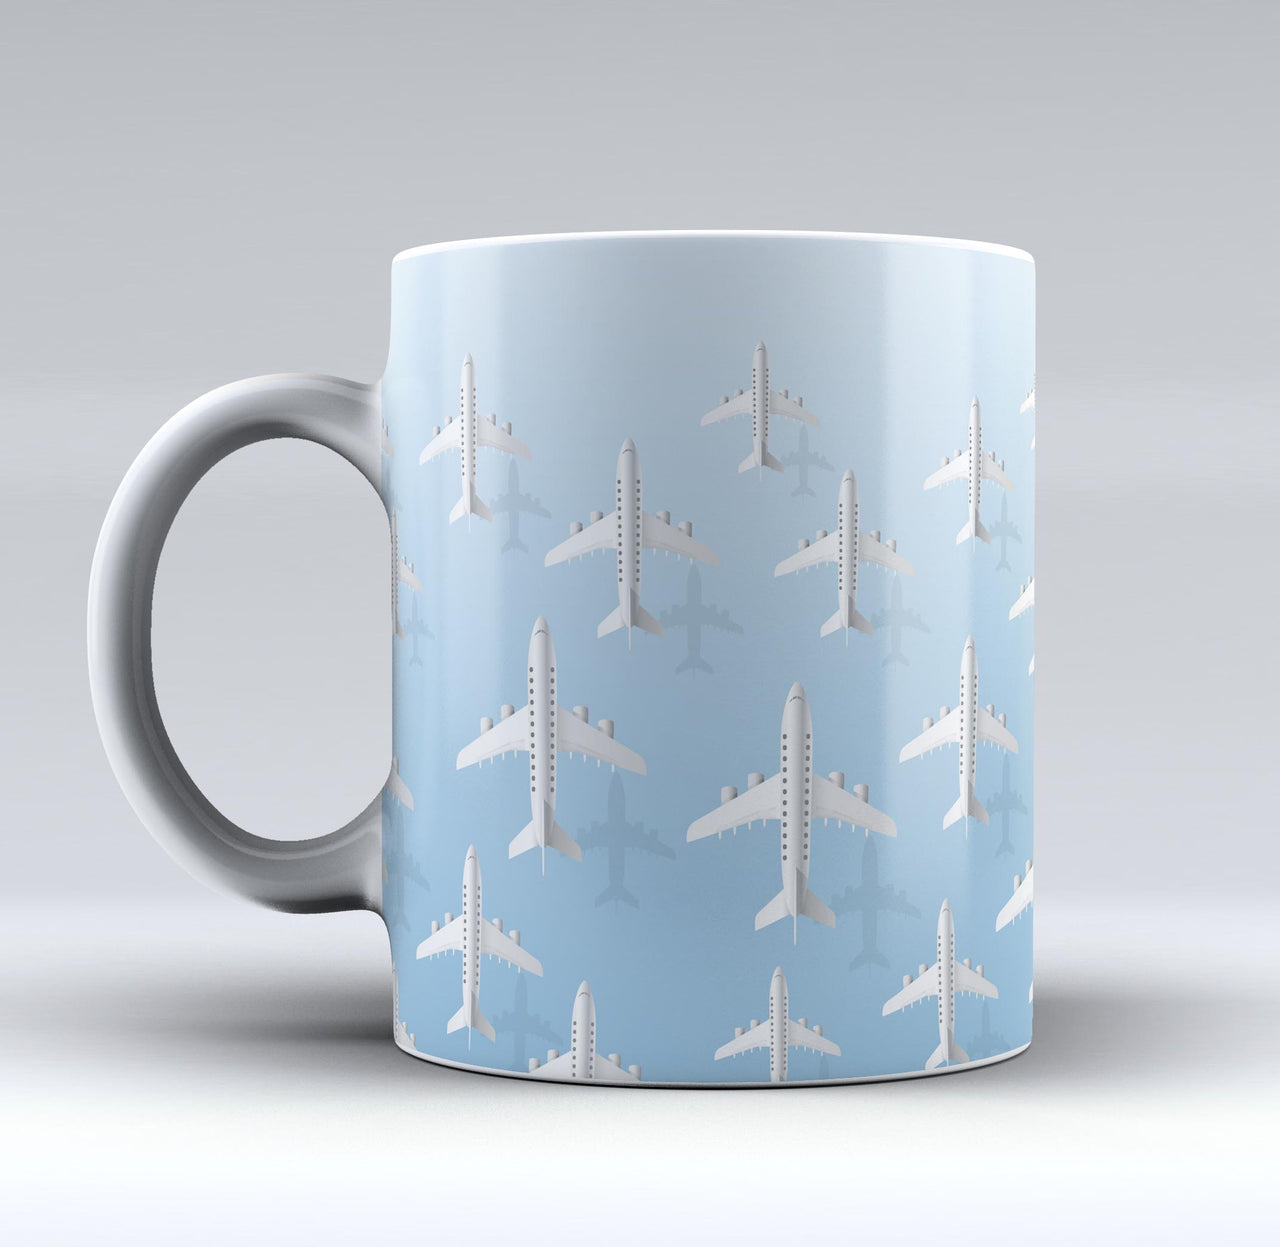 White Seamless Airplanes & Shadows Designed Mugs